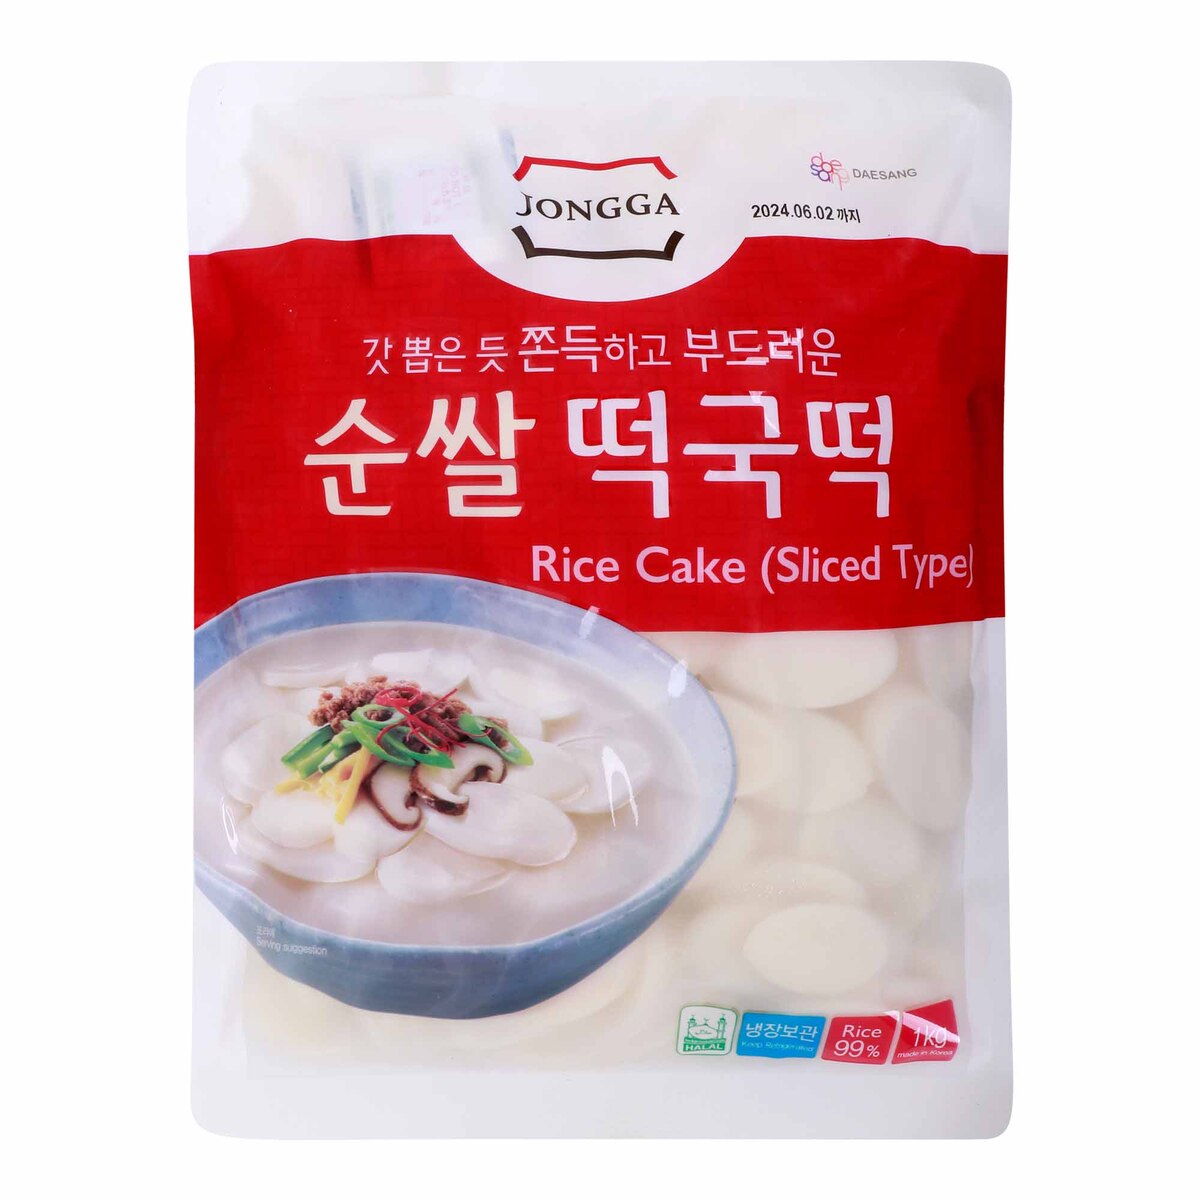 Jongga Sliced Type Rice Cake 1 kg